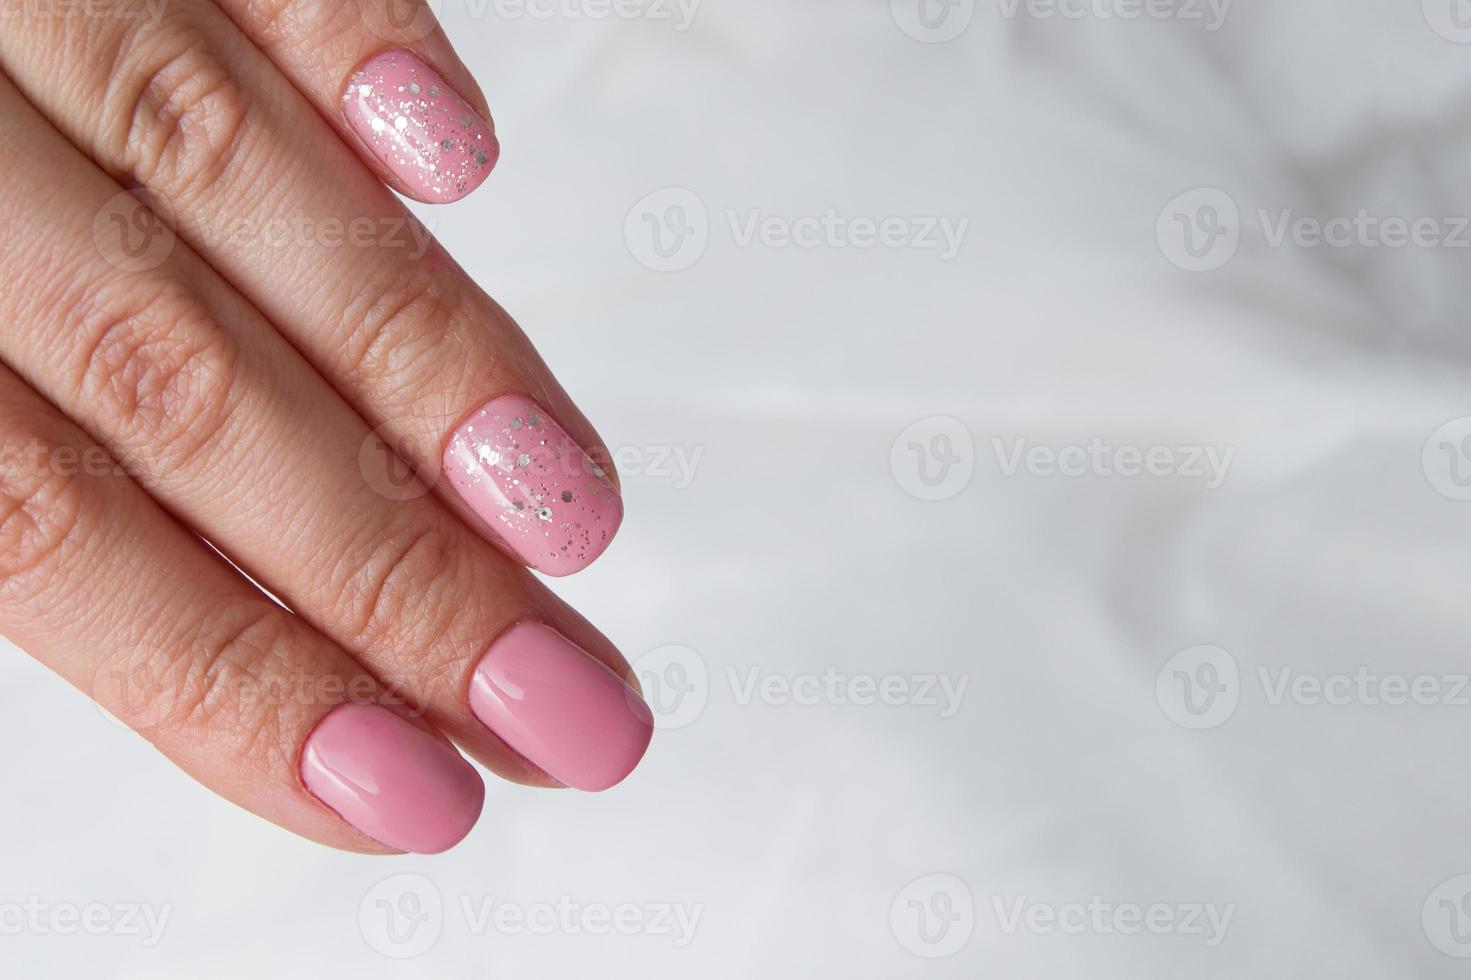 Beautiful soft pink varnish and sparkles on nails - gel varnish salon coating manicure photo